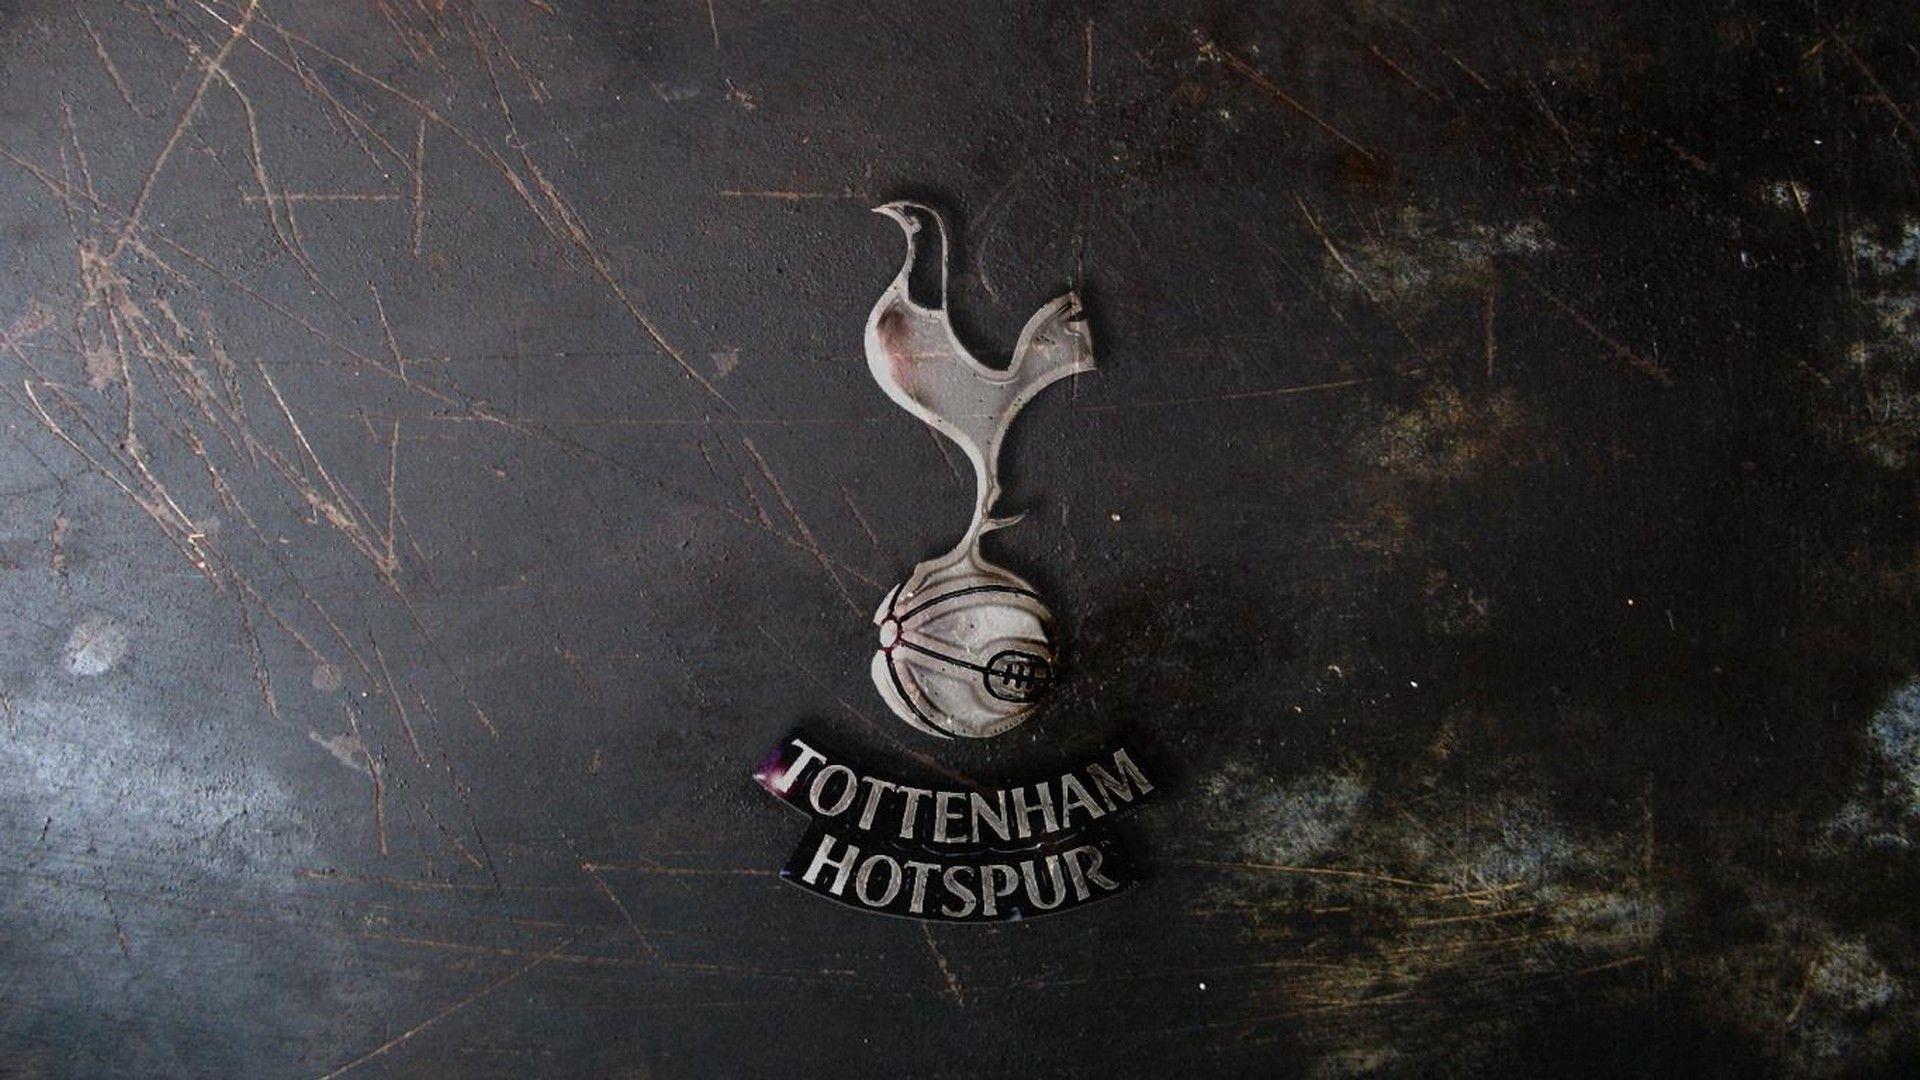 Tottenham Hotspur Hd Wallpapers Top Free Tottenham Hotspur Hd Backgrounds Wallpaperaccess